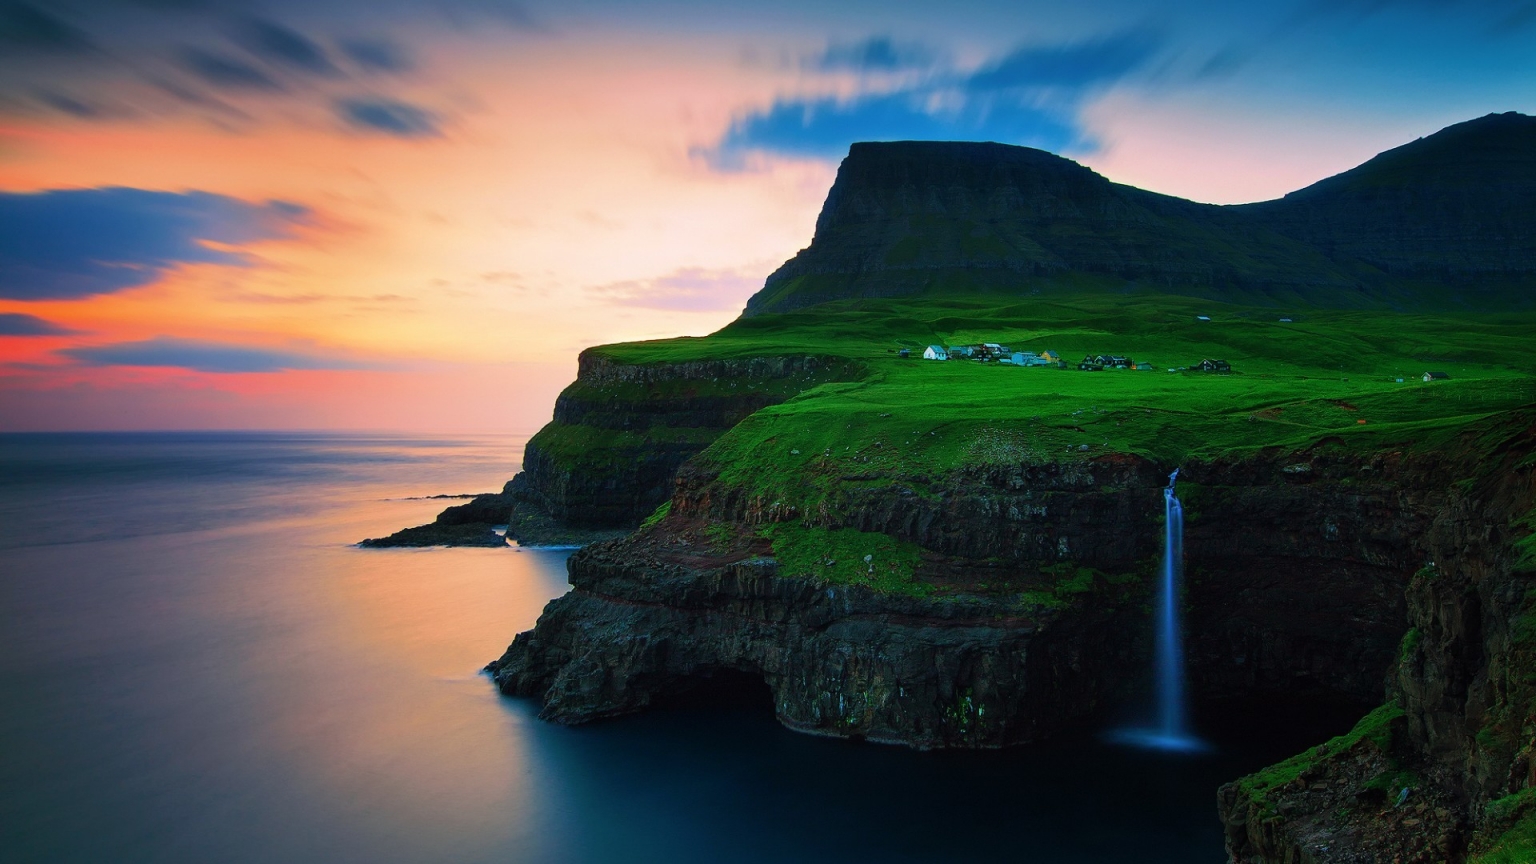 The Faroe Islands for 1536 x 864 HDTV resolution